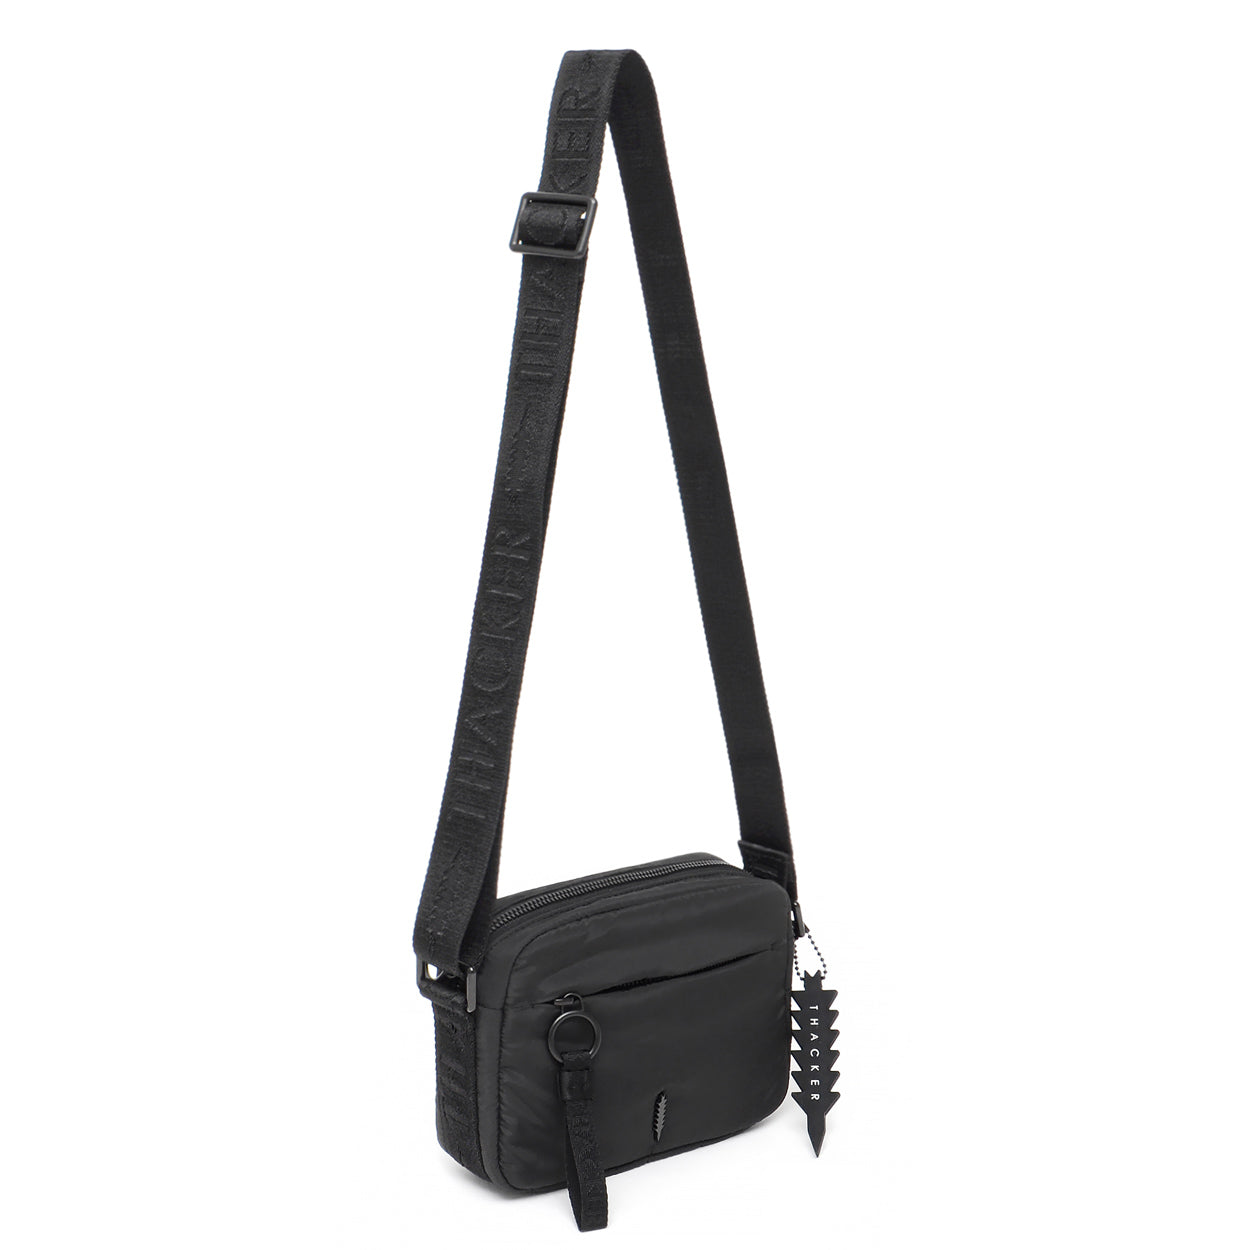 S black nylon crossbody bag with flap